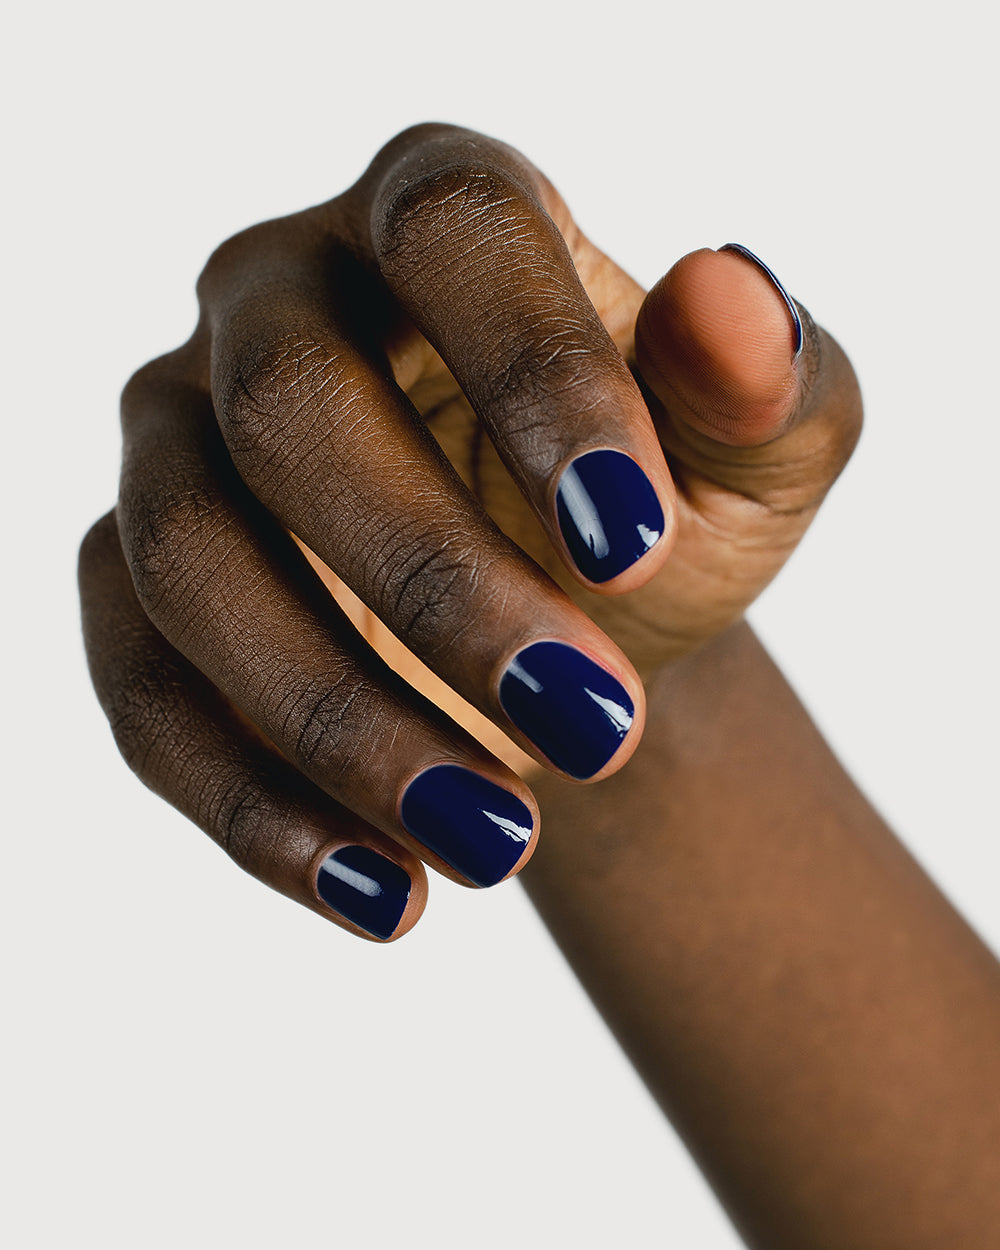 Vishine Gel Nail Polish 15ml, Navy Blue Color Soak Off UV LED Long-Lasting Nail  Gel Polish Nail Art Home DIY Manicure Nail Salon Varnish #913 :  Amazon.co.uk: Beauty